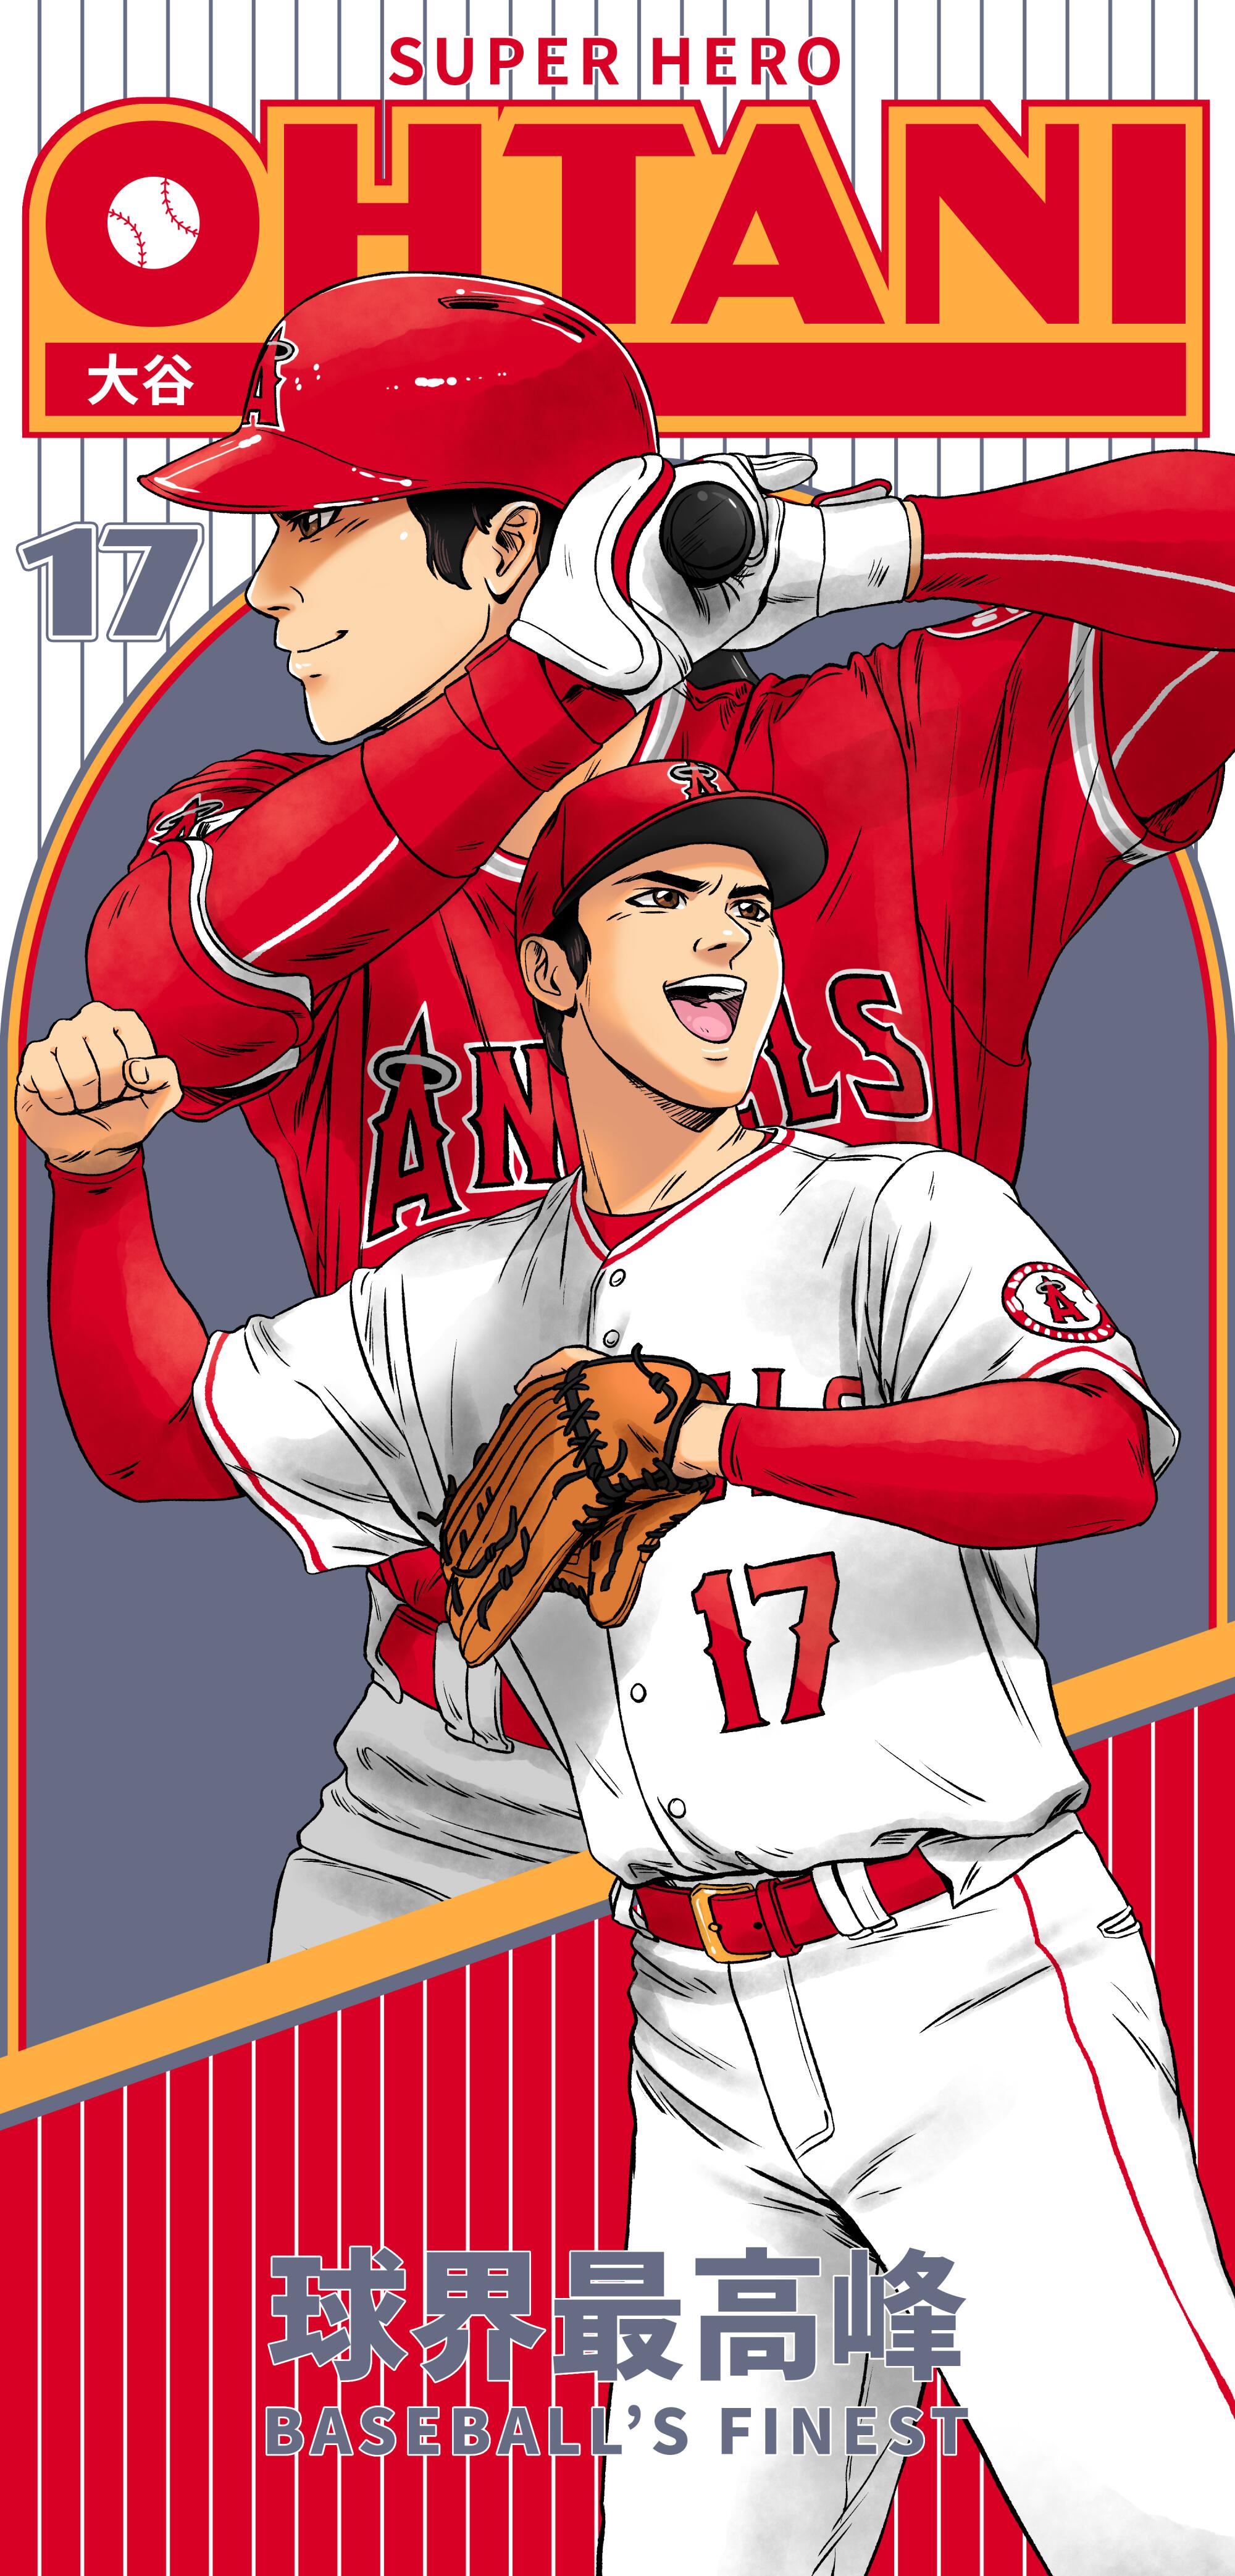 Manga-style illustration of Shohei Ohtani batting and cheering. At top text says "Super Hero"; at bottom "Baseball's Finest"